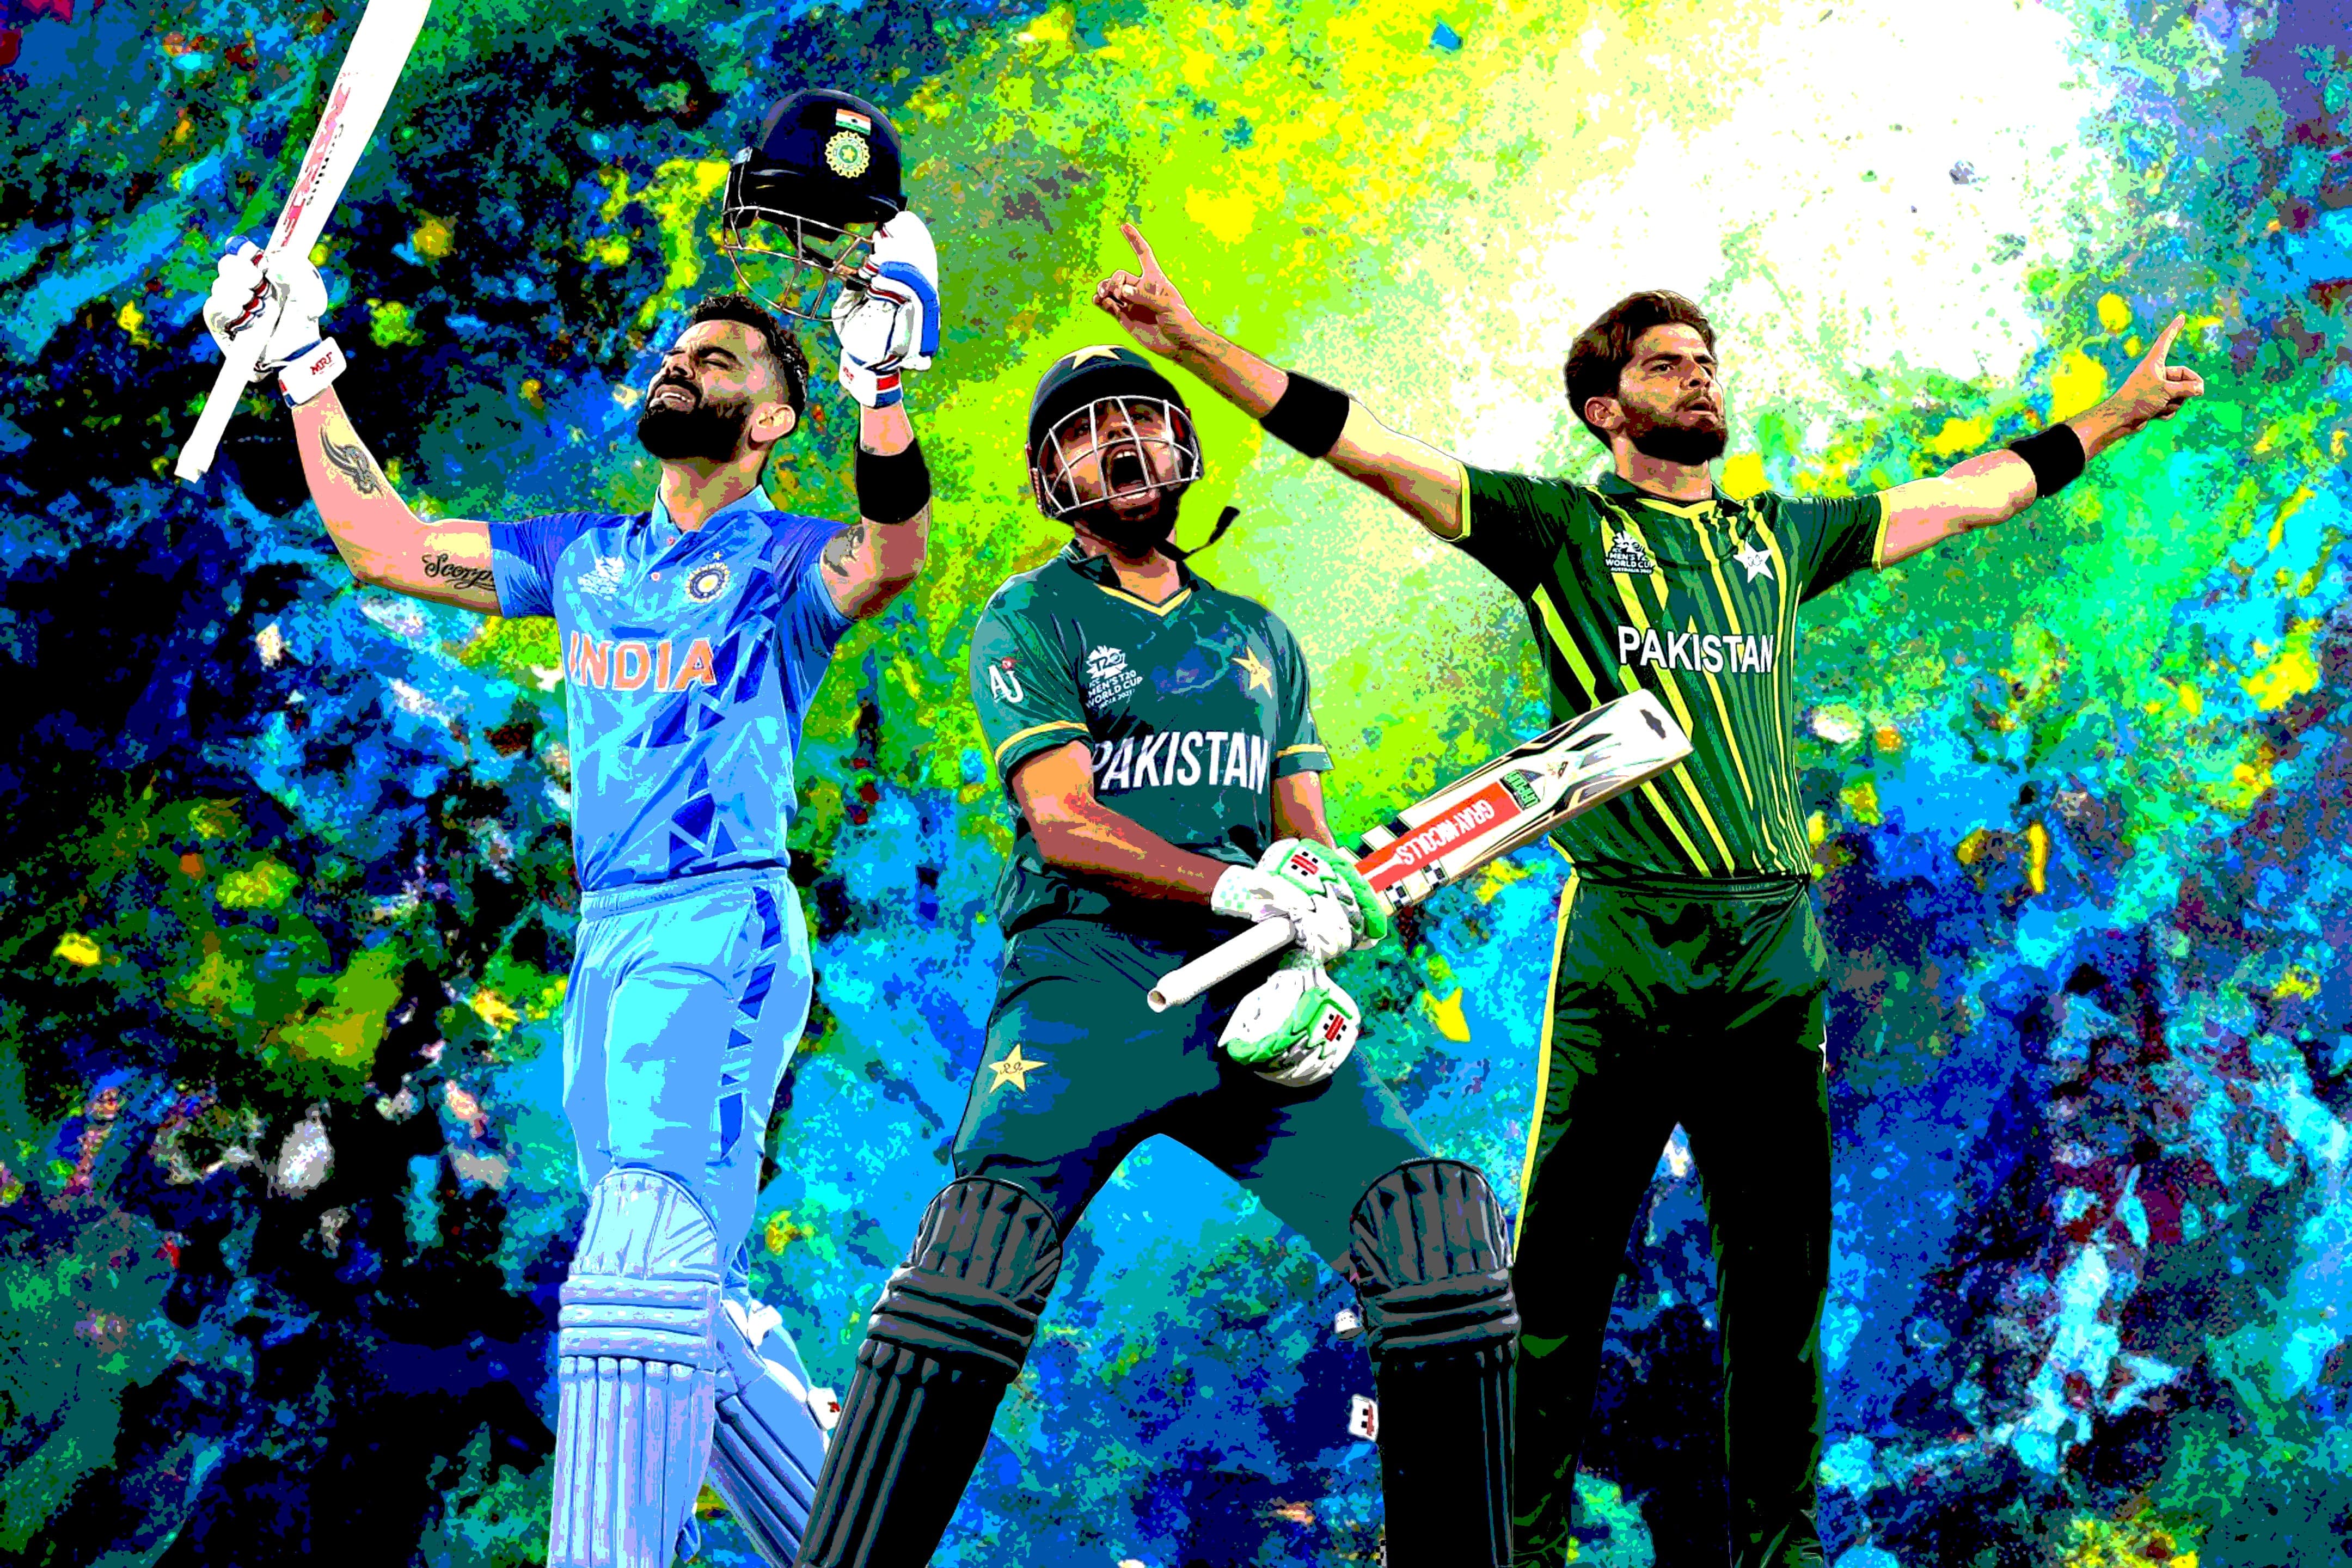 Cricket (Shaheen, Babar, Kohli)